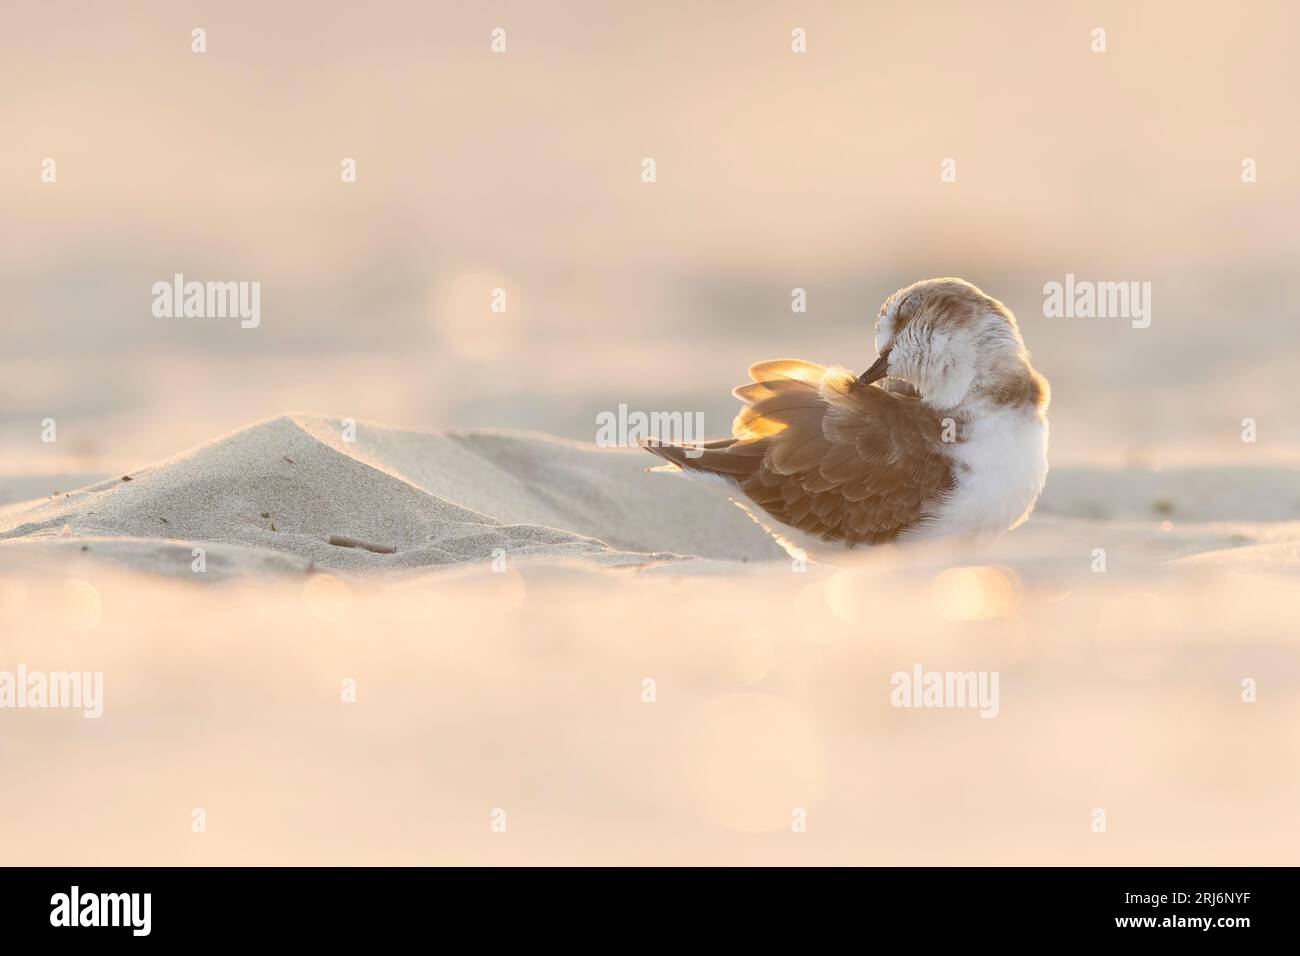 Watvögel oder Strandvögel, kentischpflug (Charadrius alexandrinus) am Strand. Stockfoto